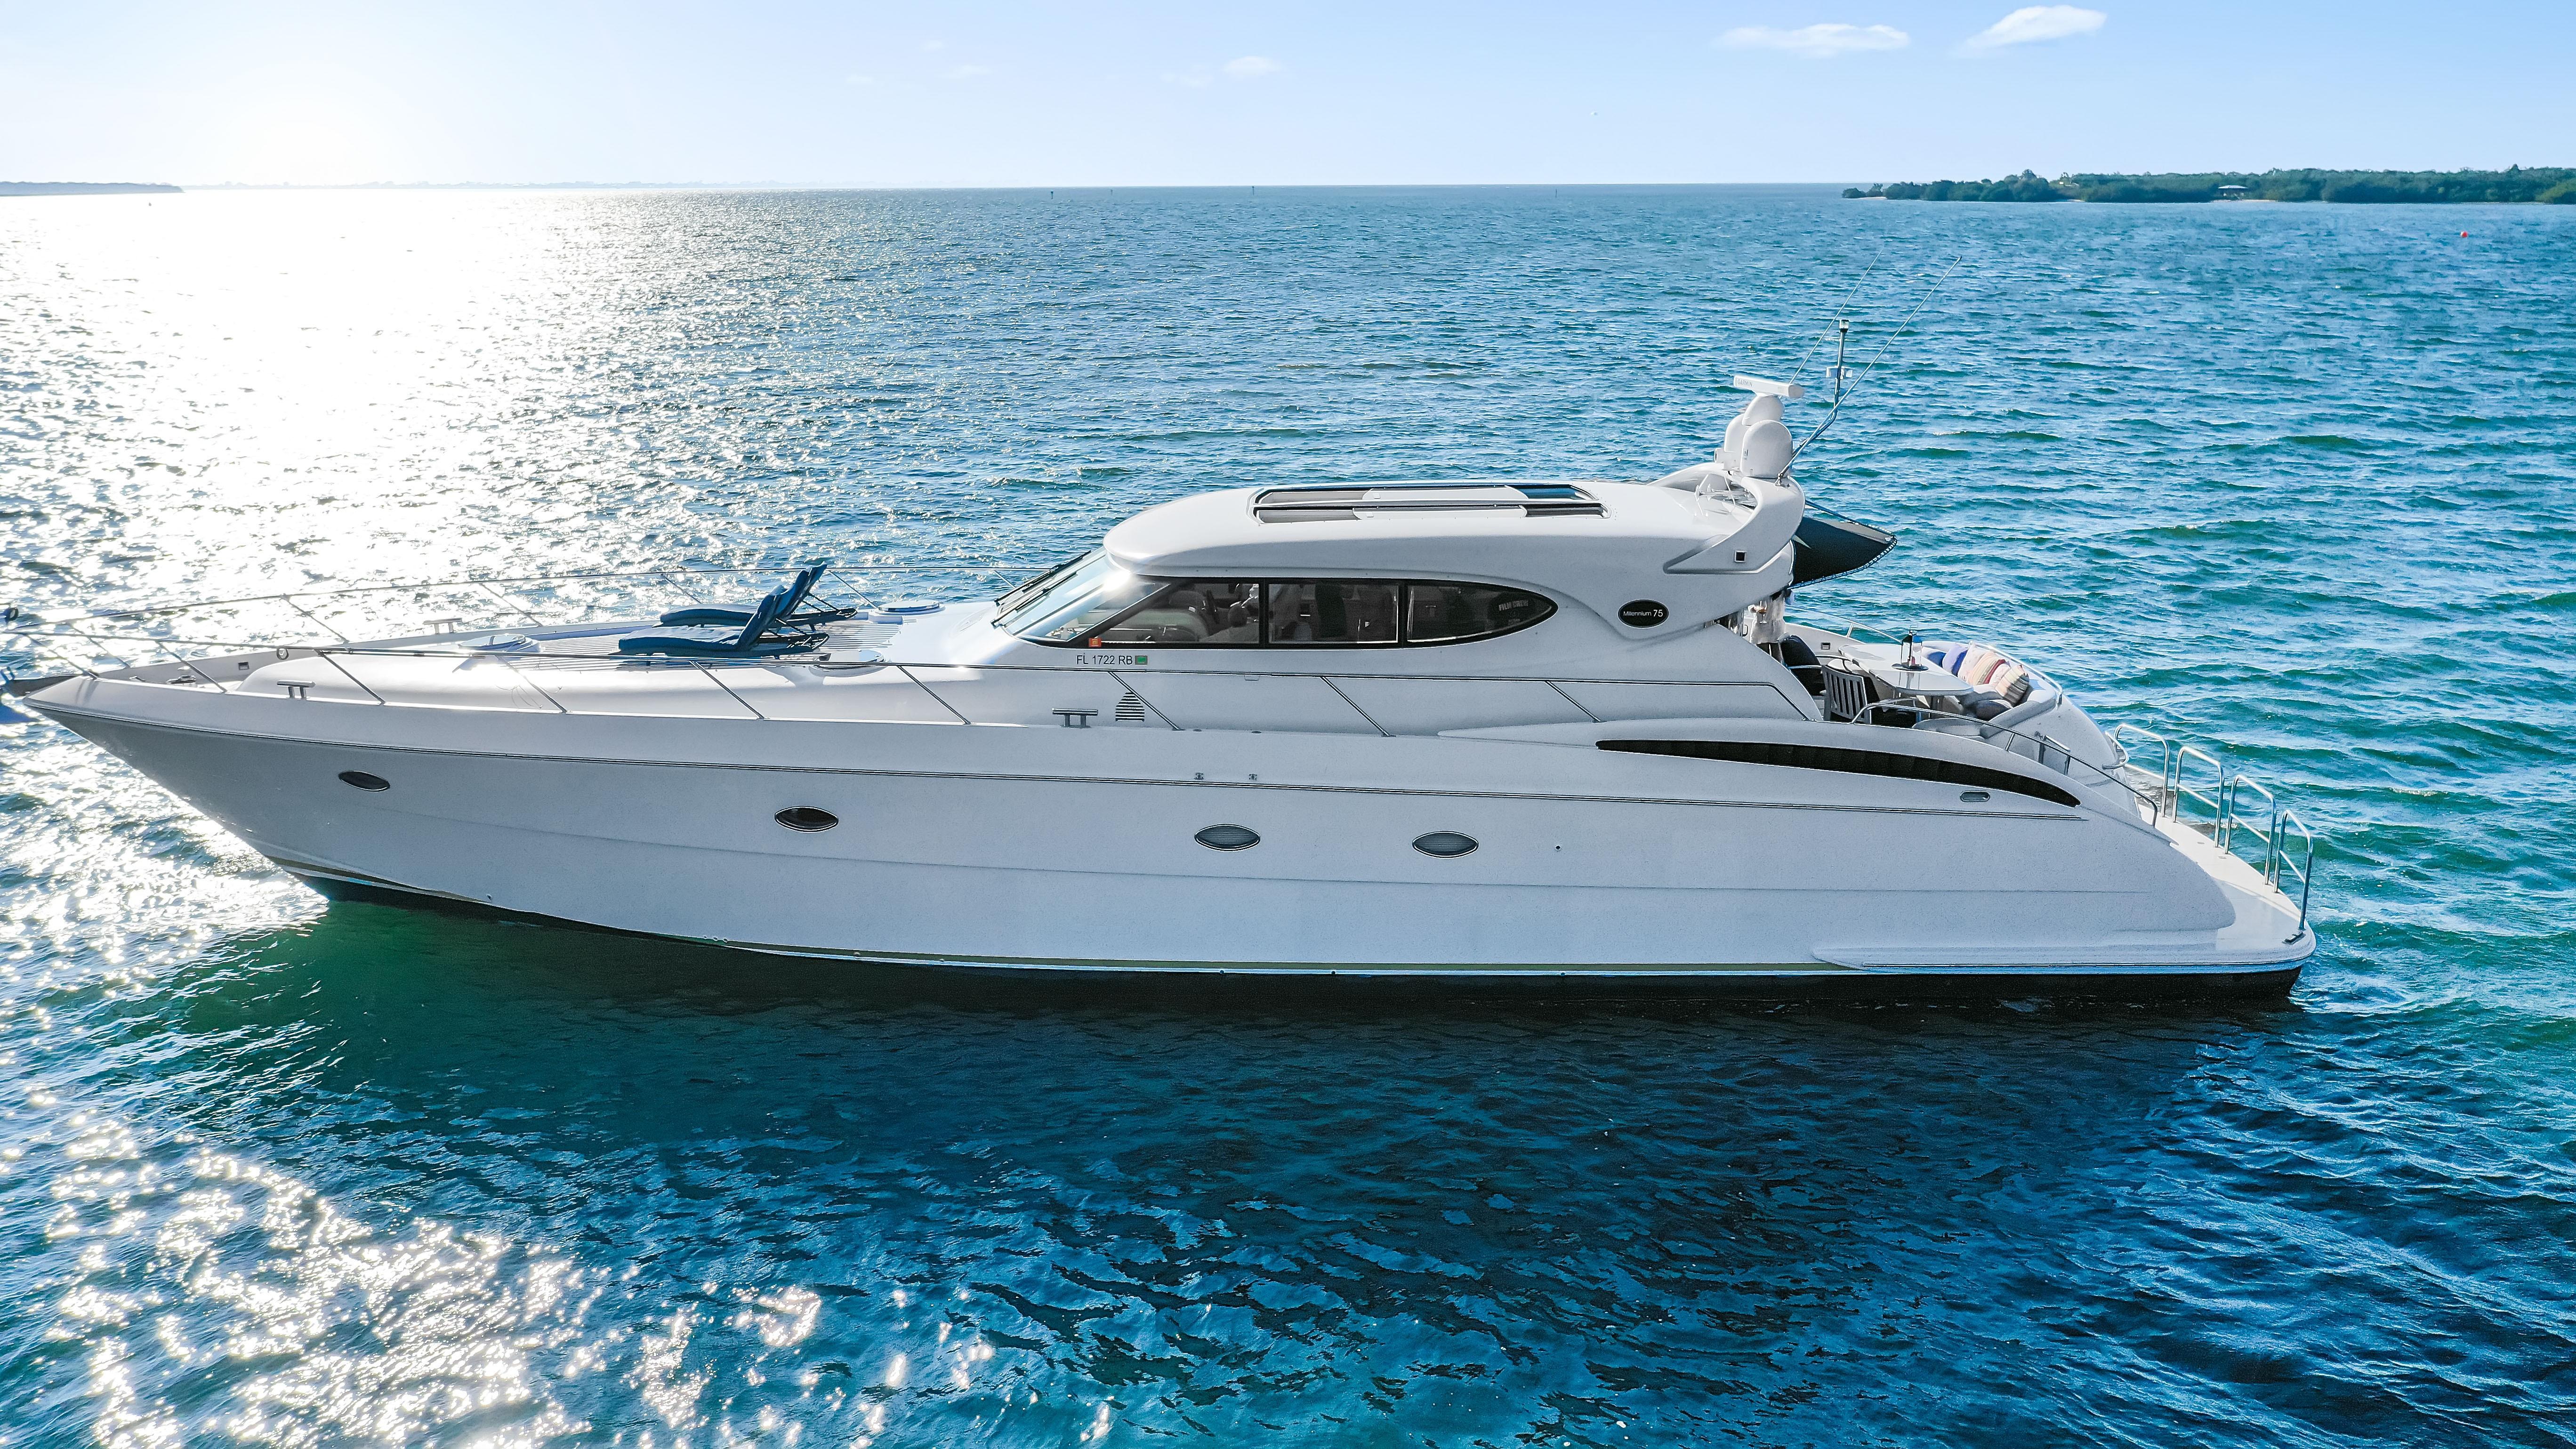 neptunus 55 yachts for sale